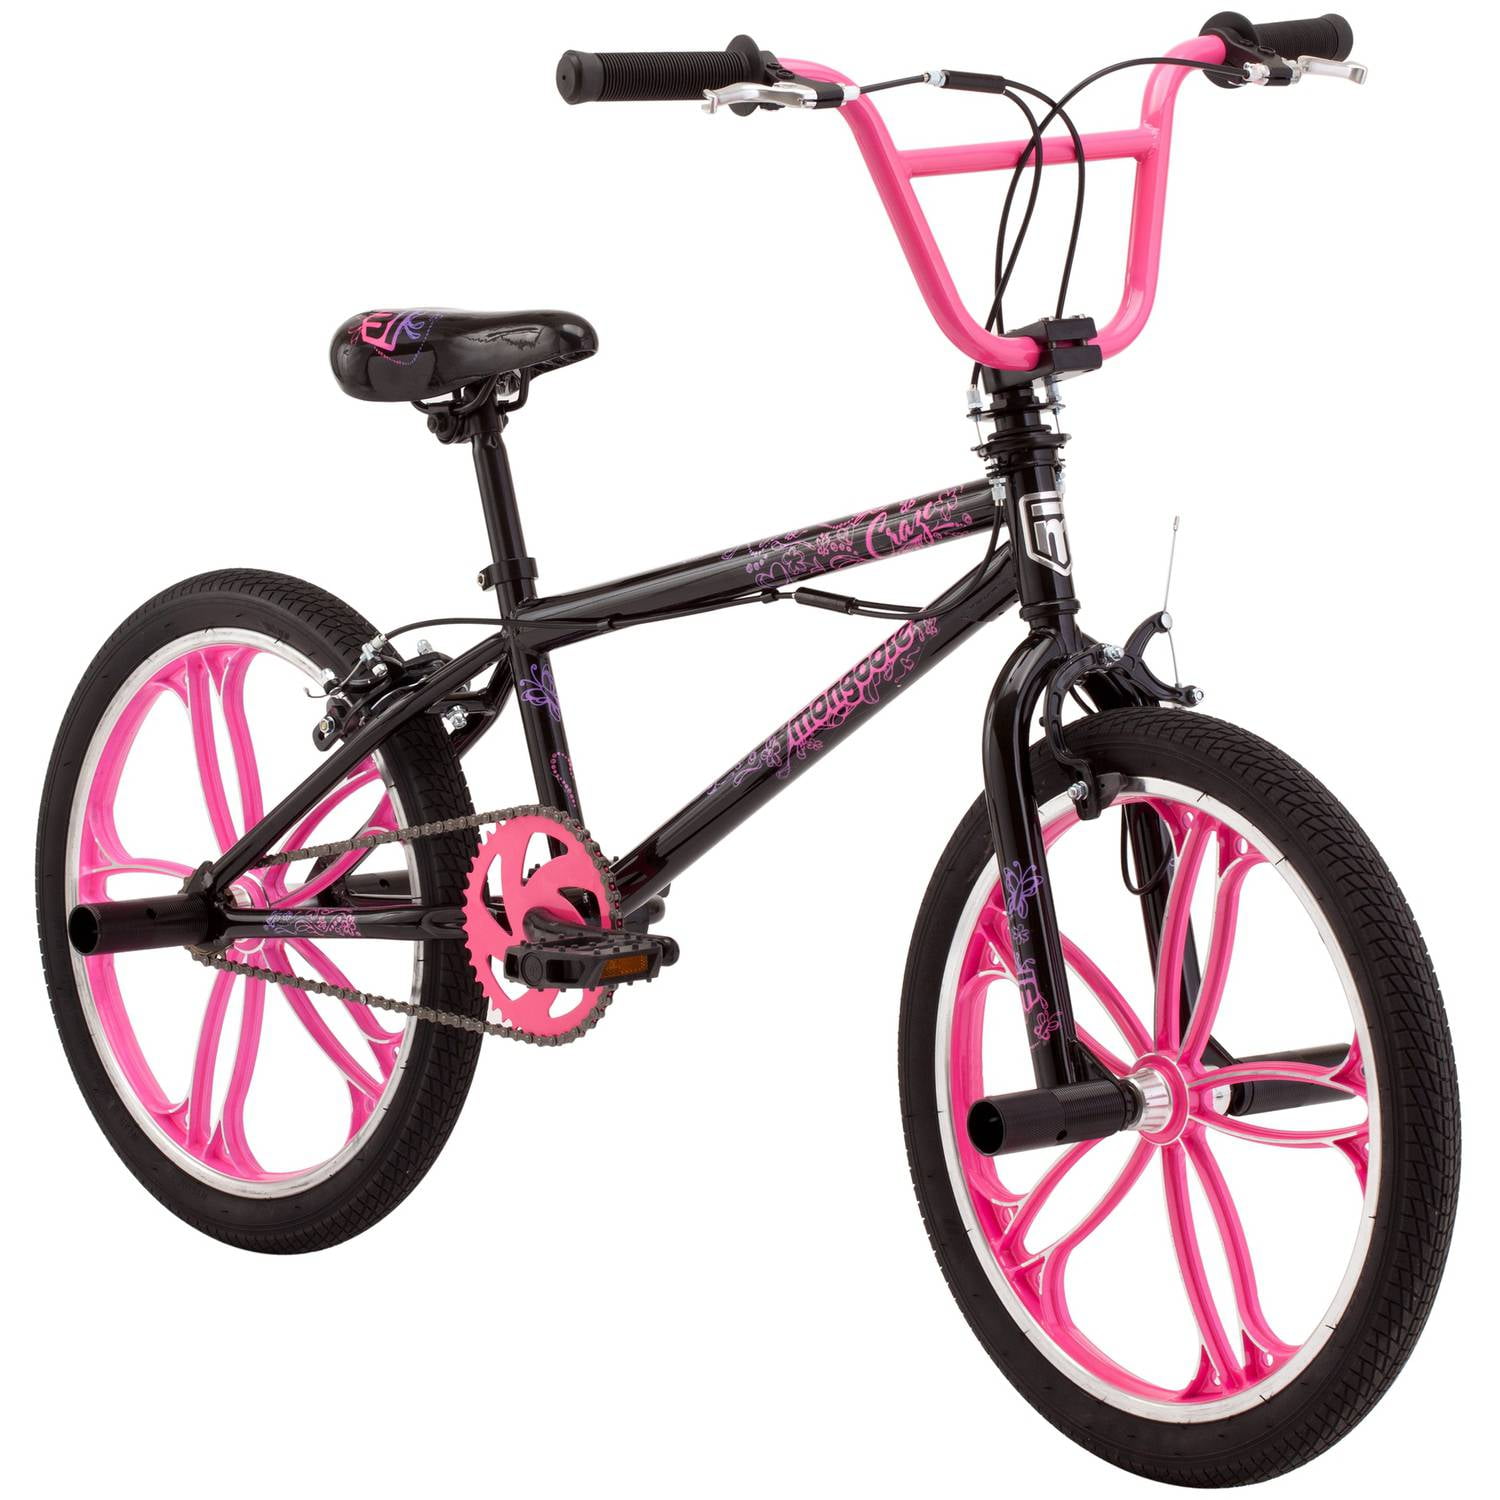 20 In Mongoose Craze Freestyle Girls Bmx Bike 038675068353 Ebay 